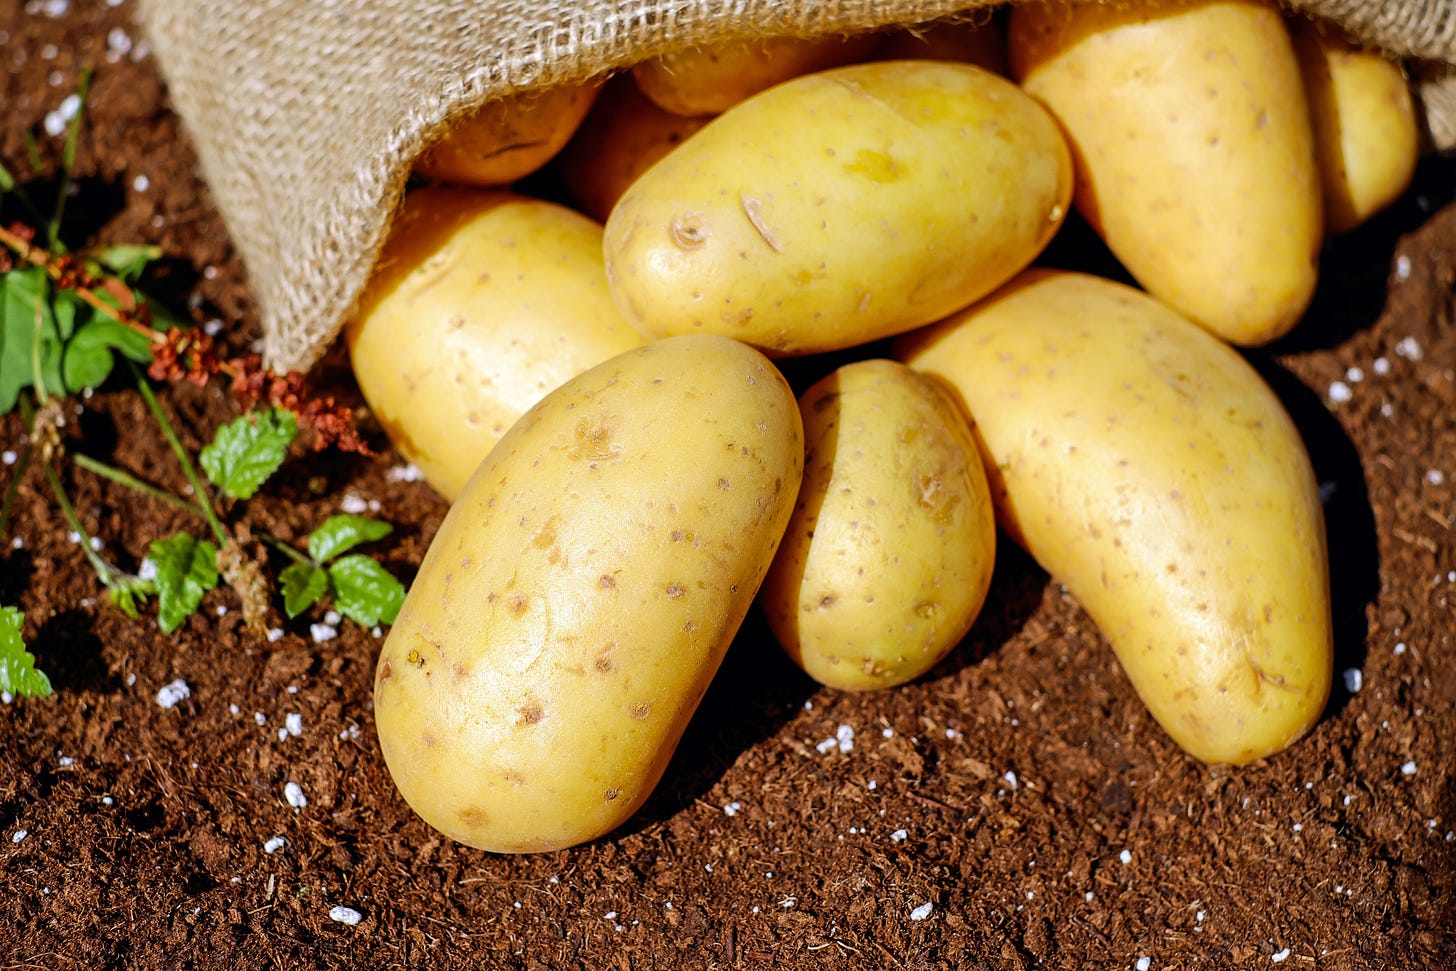 A photograph of a bag of potatoes.